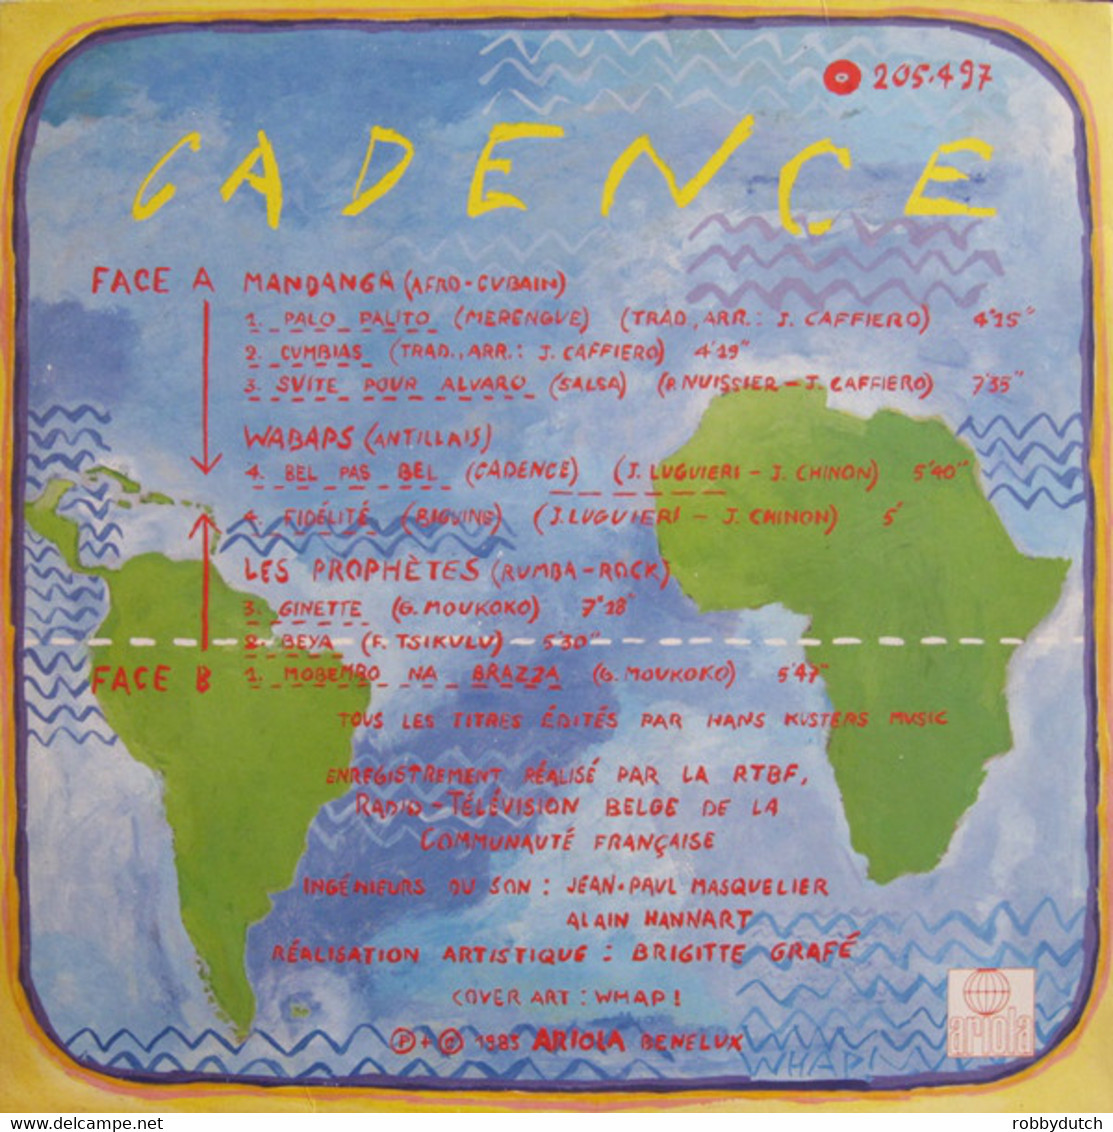 * LP * CADENCE - VARIOUS ARTISTS (Holland 1983 EX!!) - World Music